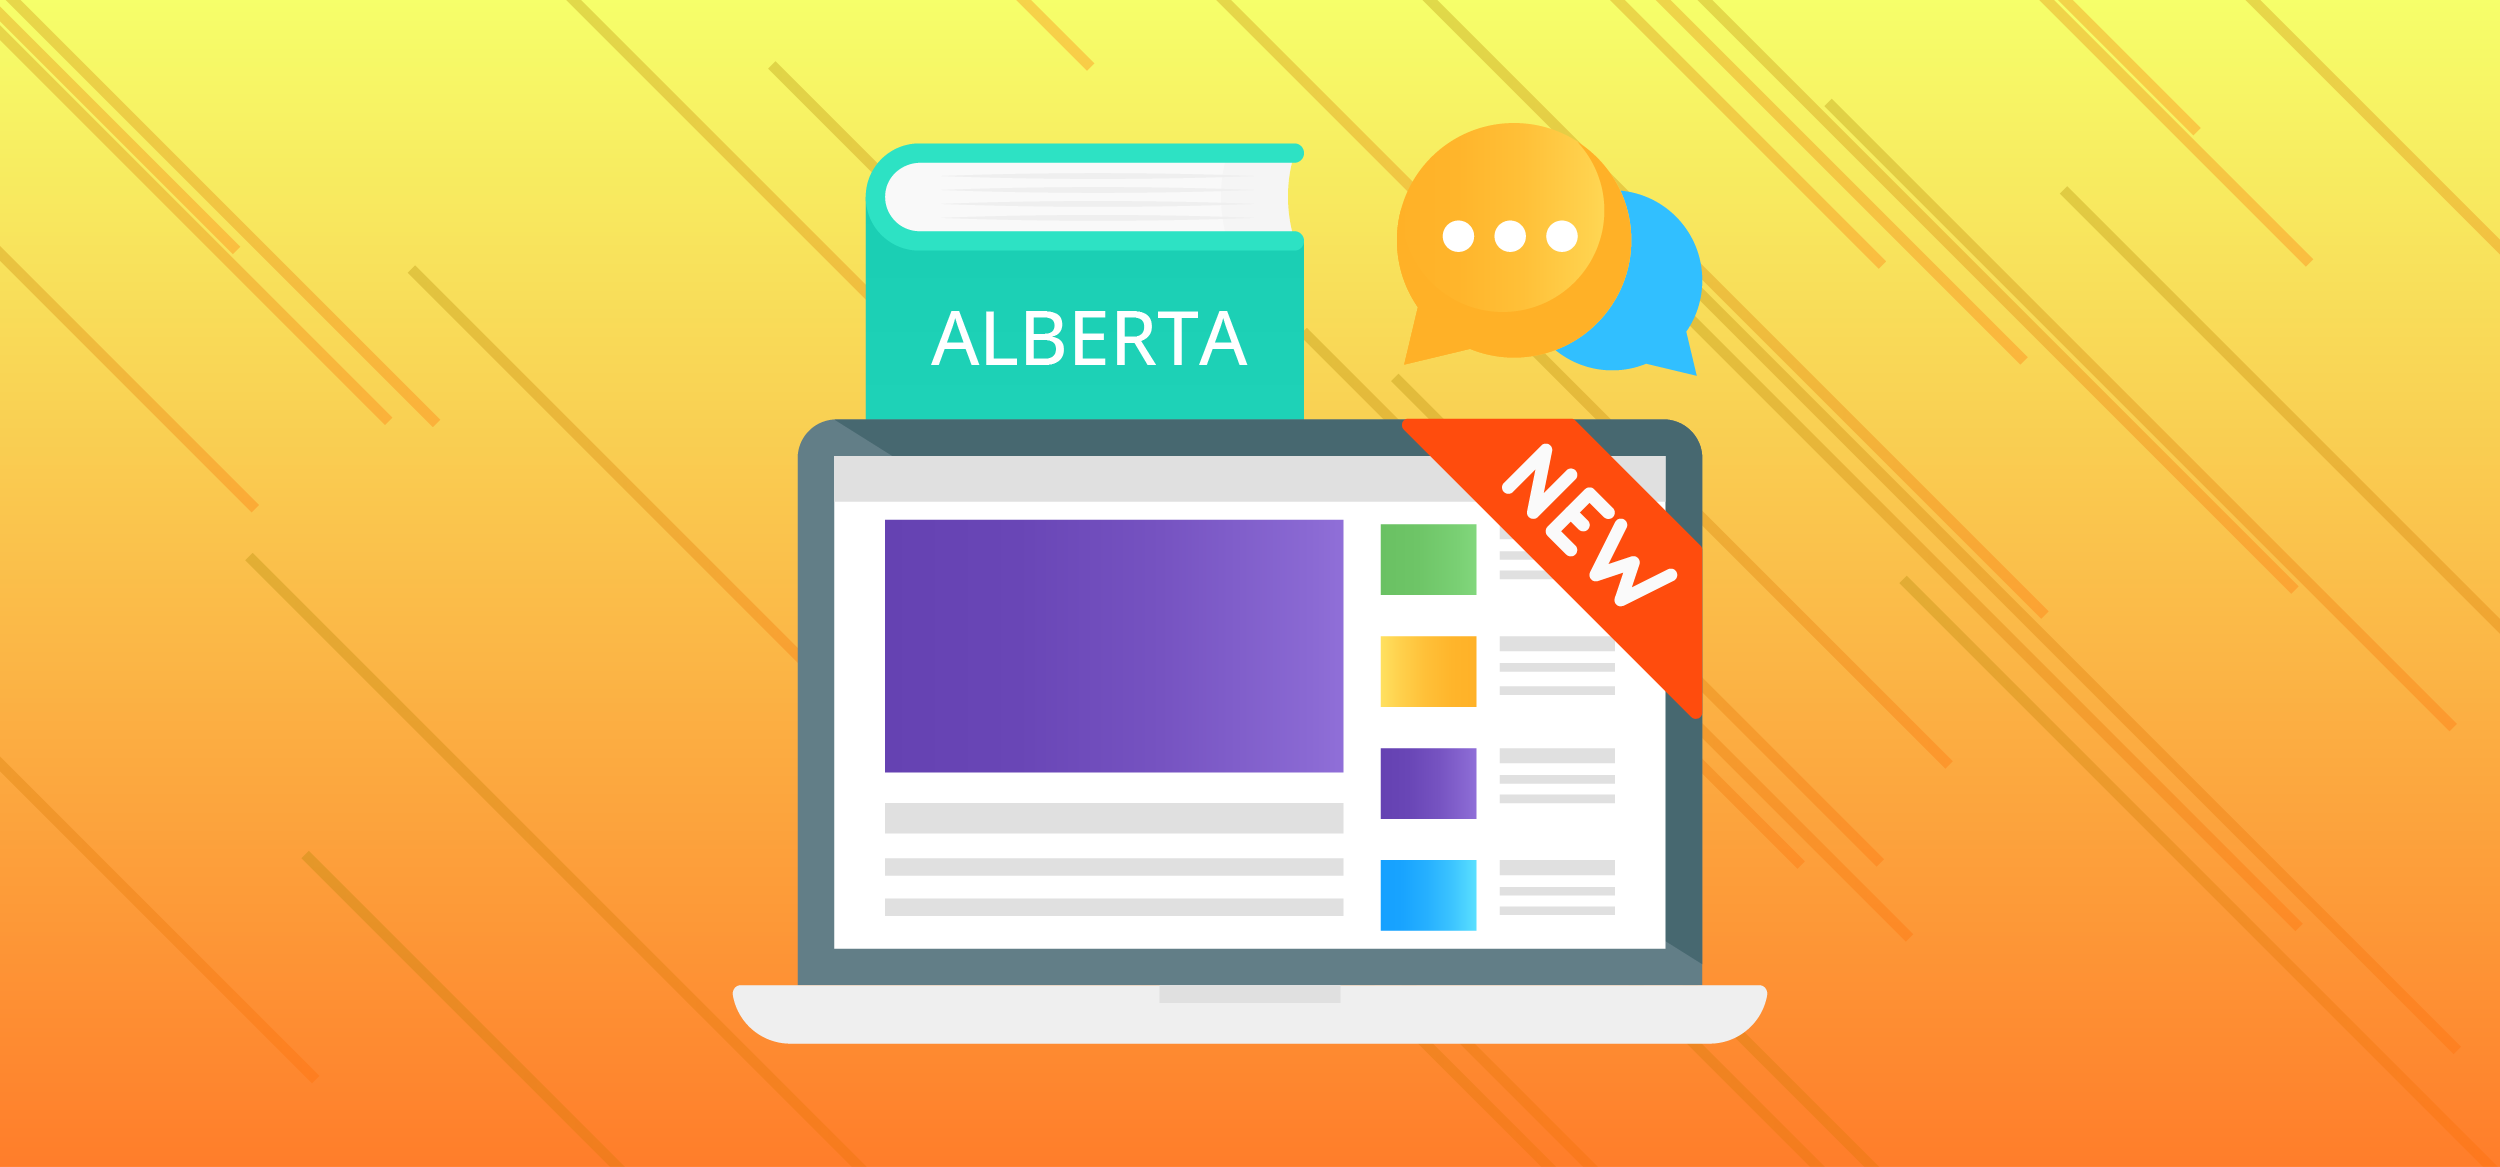 Understanding the new Alberta curriculum